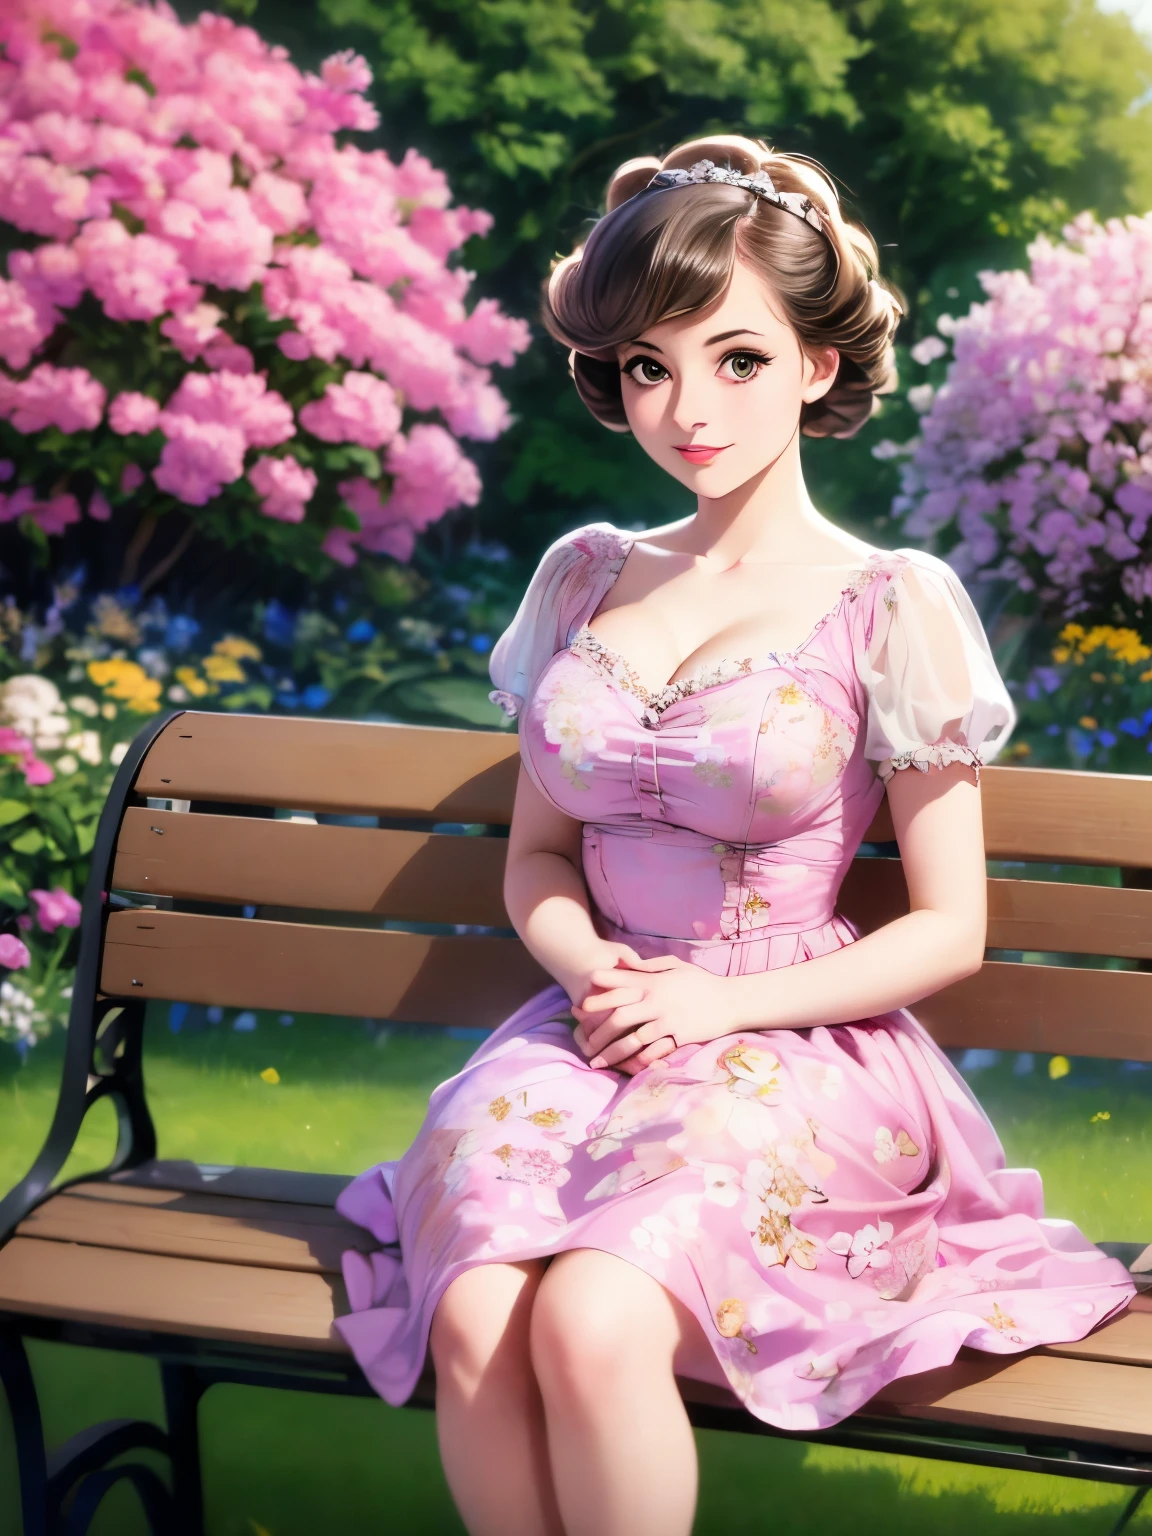 arafed woman 드레스를 입고 sitting on a bench in a garden, Evaline Ness의 컬러 사진, 플리커, 낭만주의, 1 9 5 0 초 스타일, 5 0 초 스타일, 50년대 스타일, dressed in a 꽃 드레스, 핑크색 꽃무늬 드레스를 입고, 꽃 드레스, 멋진 드레스를 입고, 드레스를 입고, retro 5 0 초 스타일